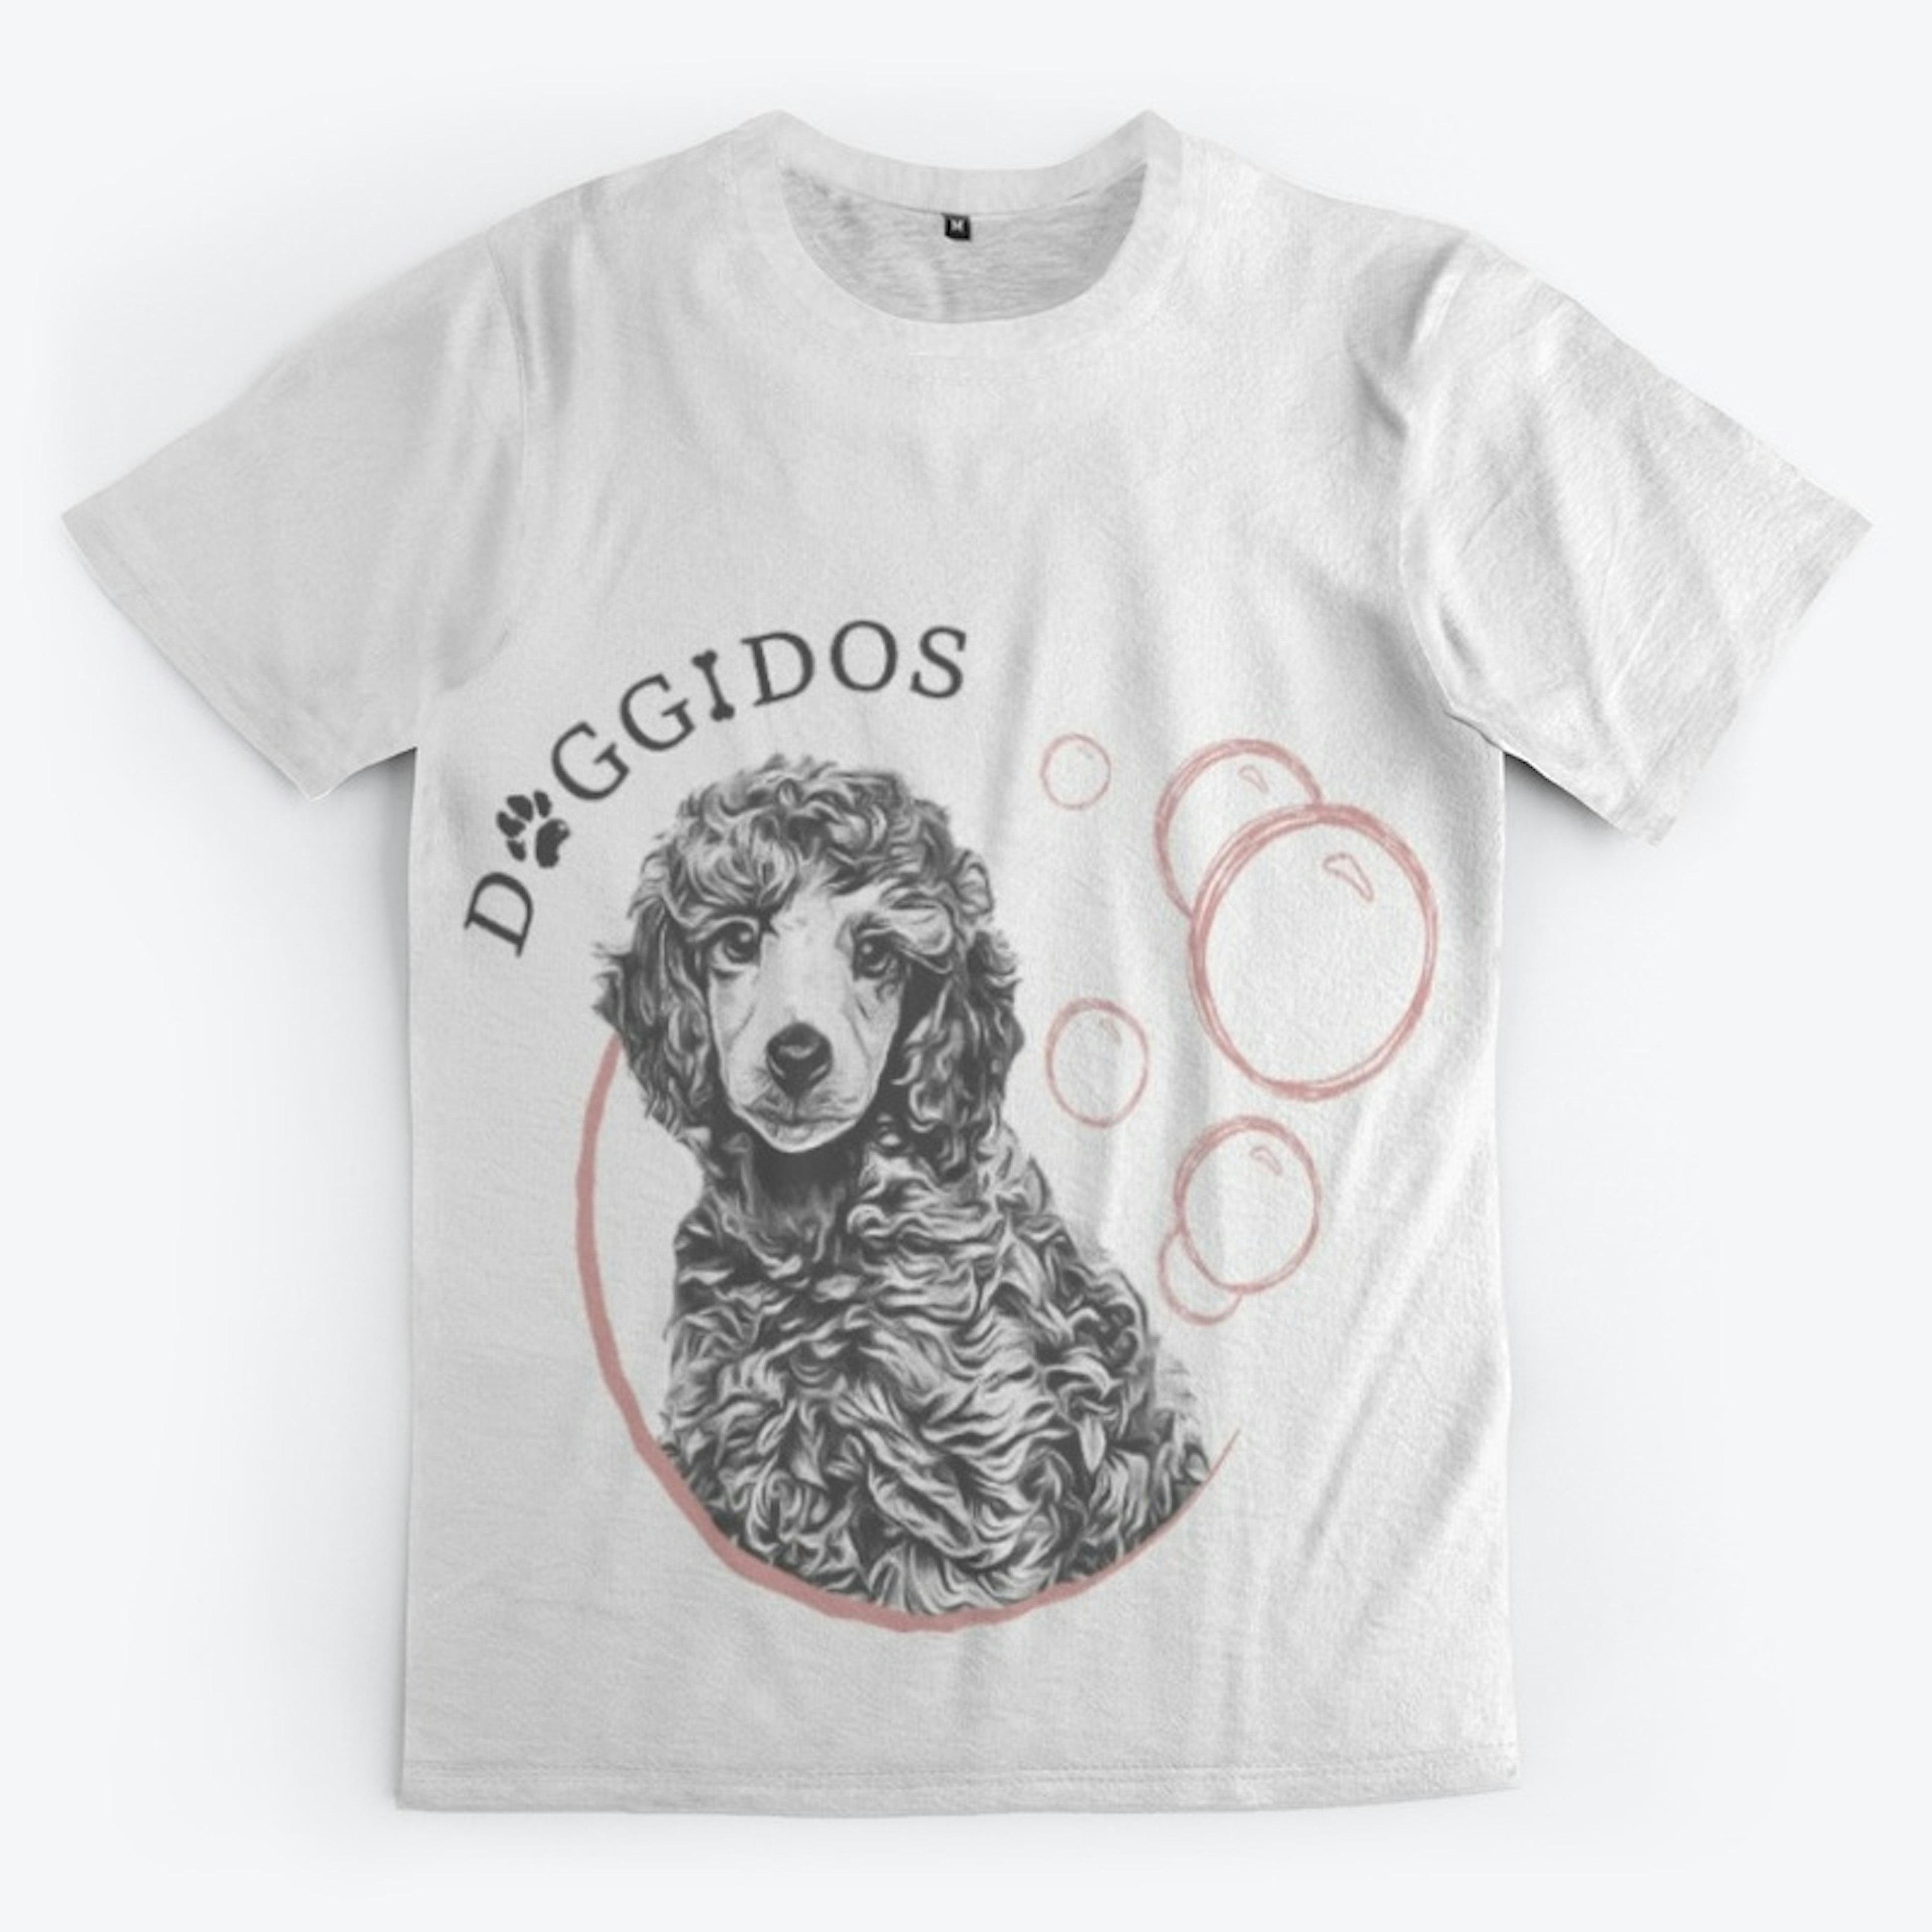 Doggidos Graphic Tee 2